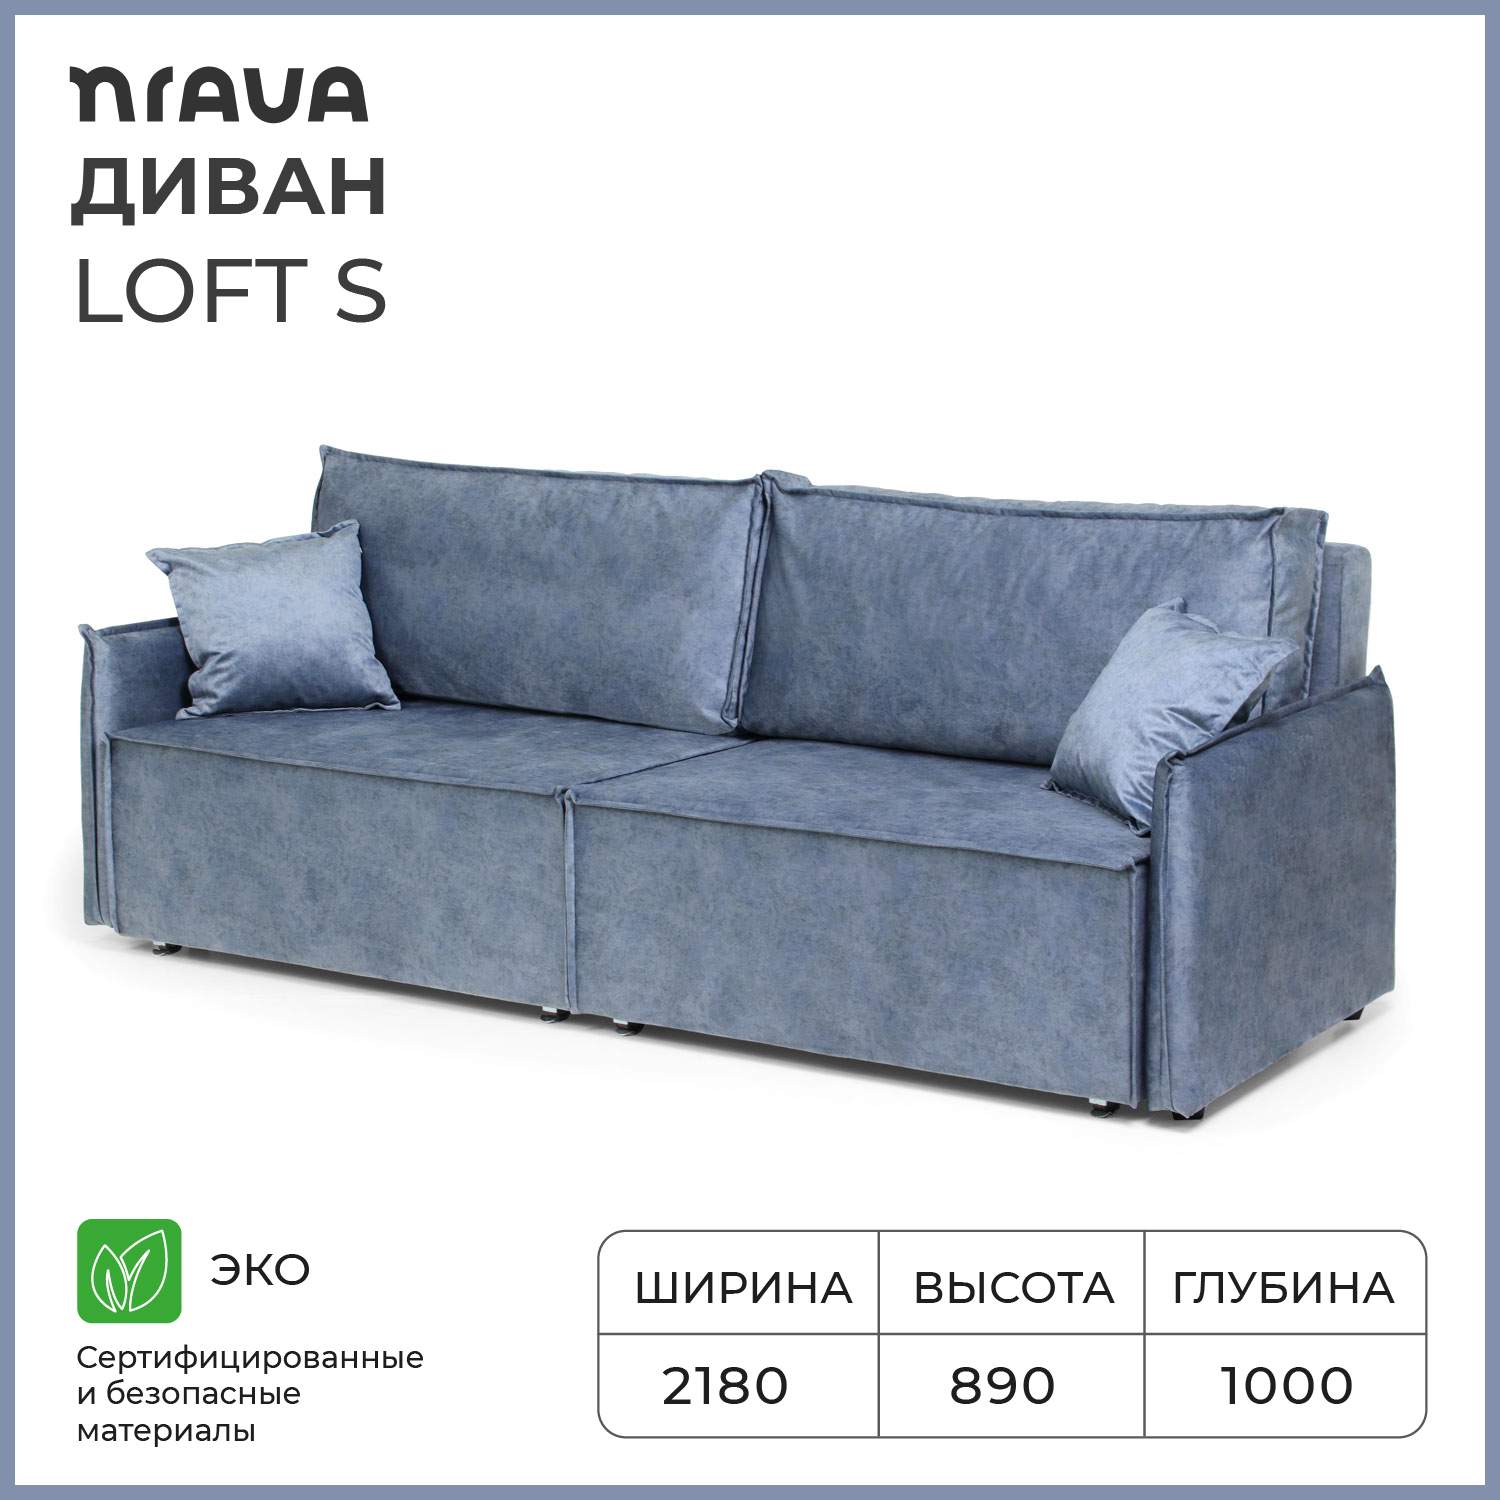 Диван-кровать NRAVA Loft S 2180х1000х890 ROCK 10, синий - отзывыпокупателей на Мегамаркет